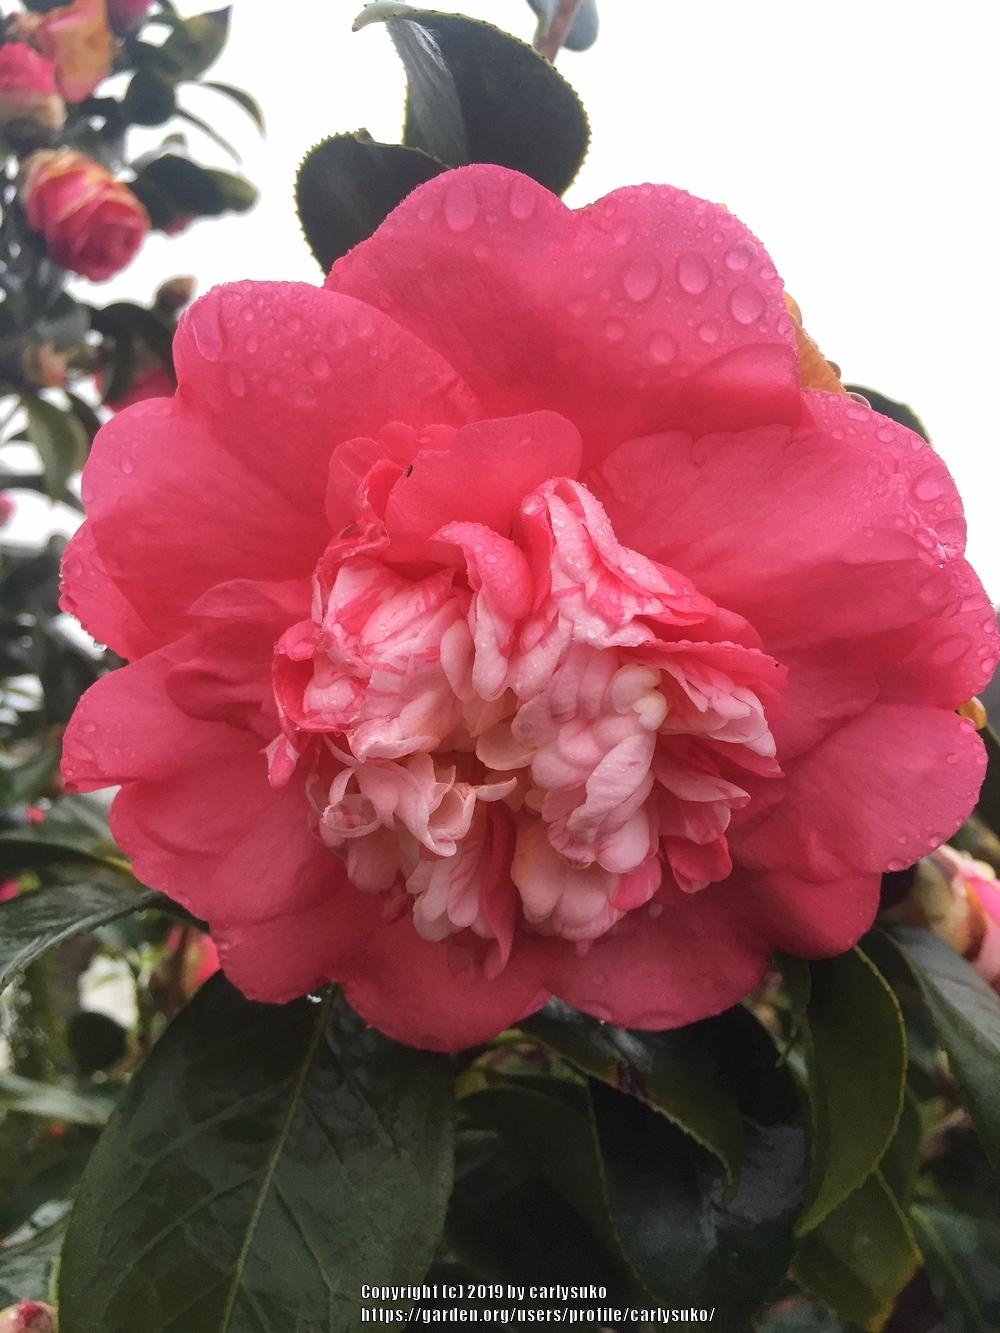 Photo of Camellias (Camellia) uploaded by carlysuko